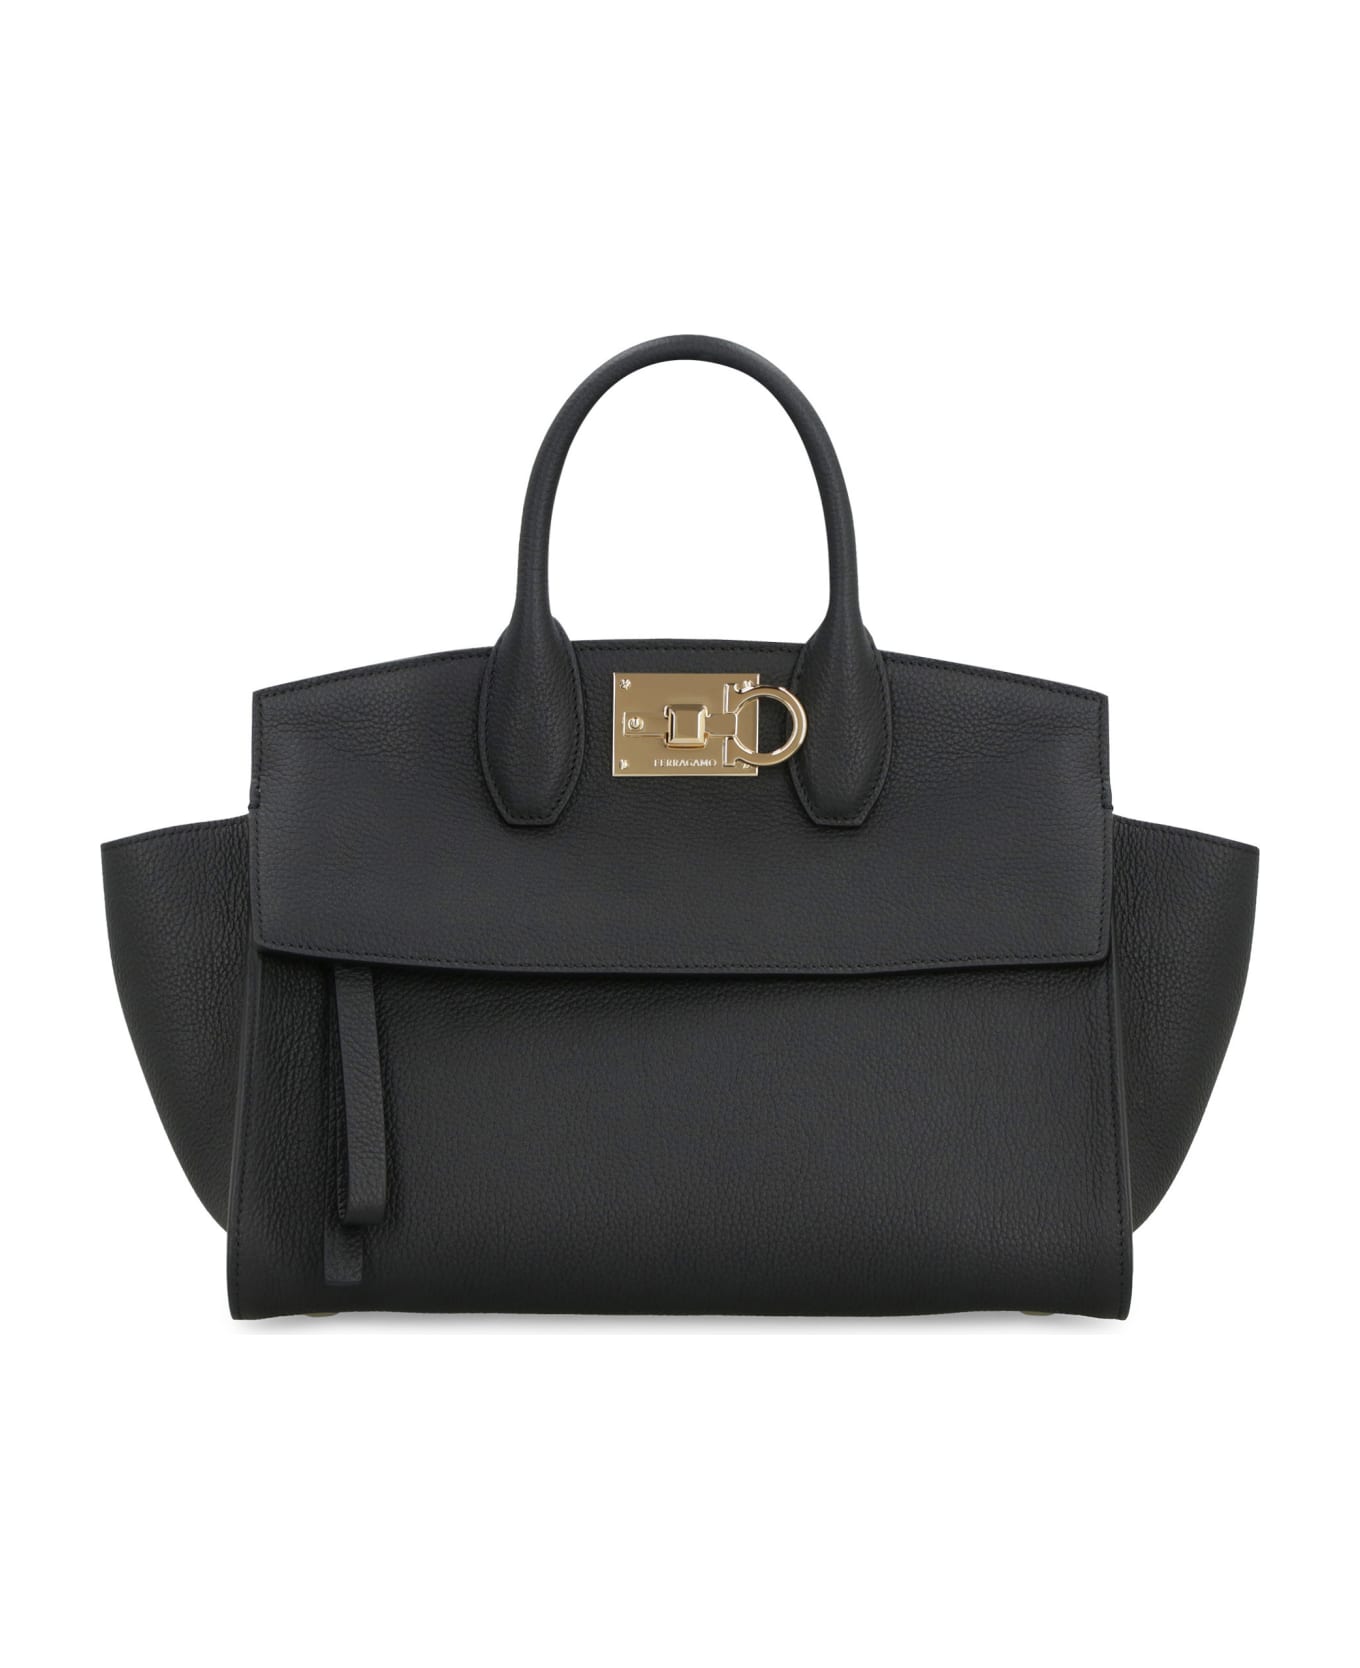 Ferragamo Studio Soft Leather Handbag - Nero